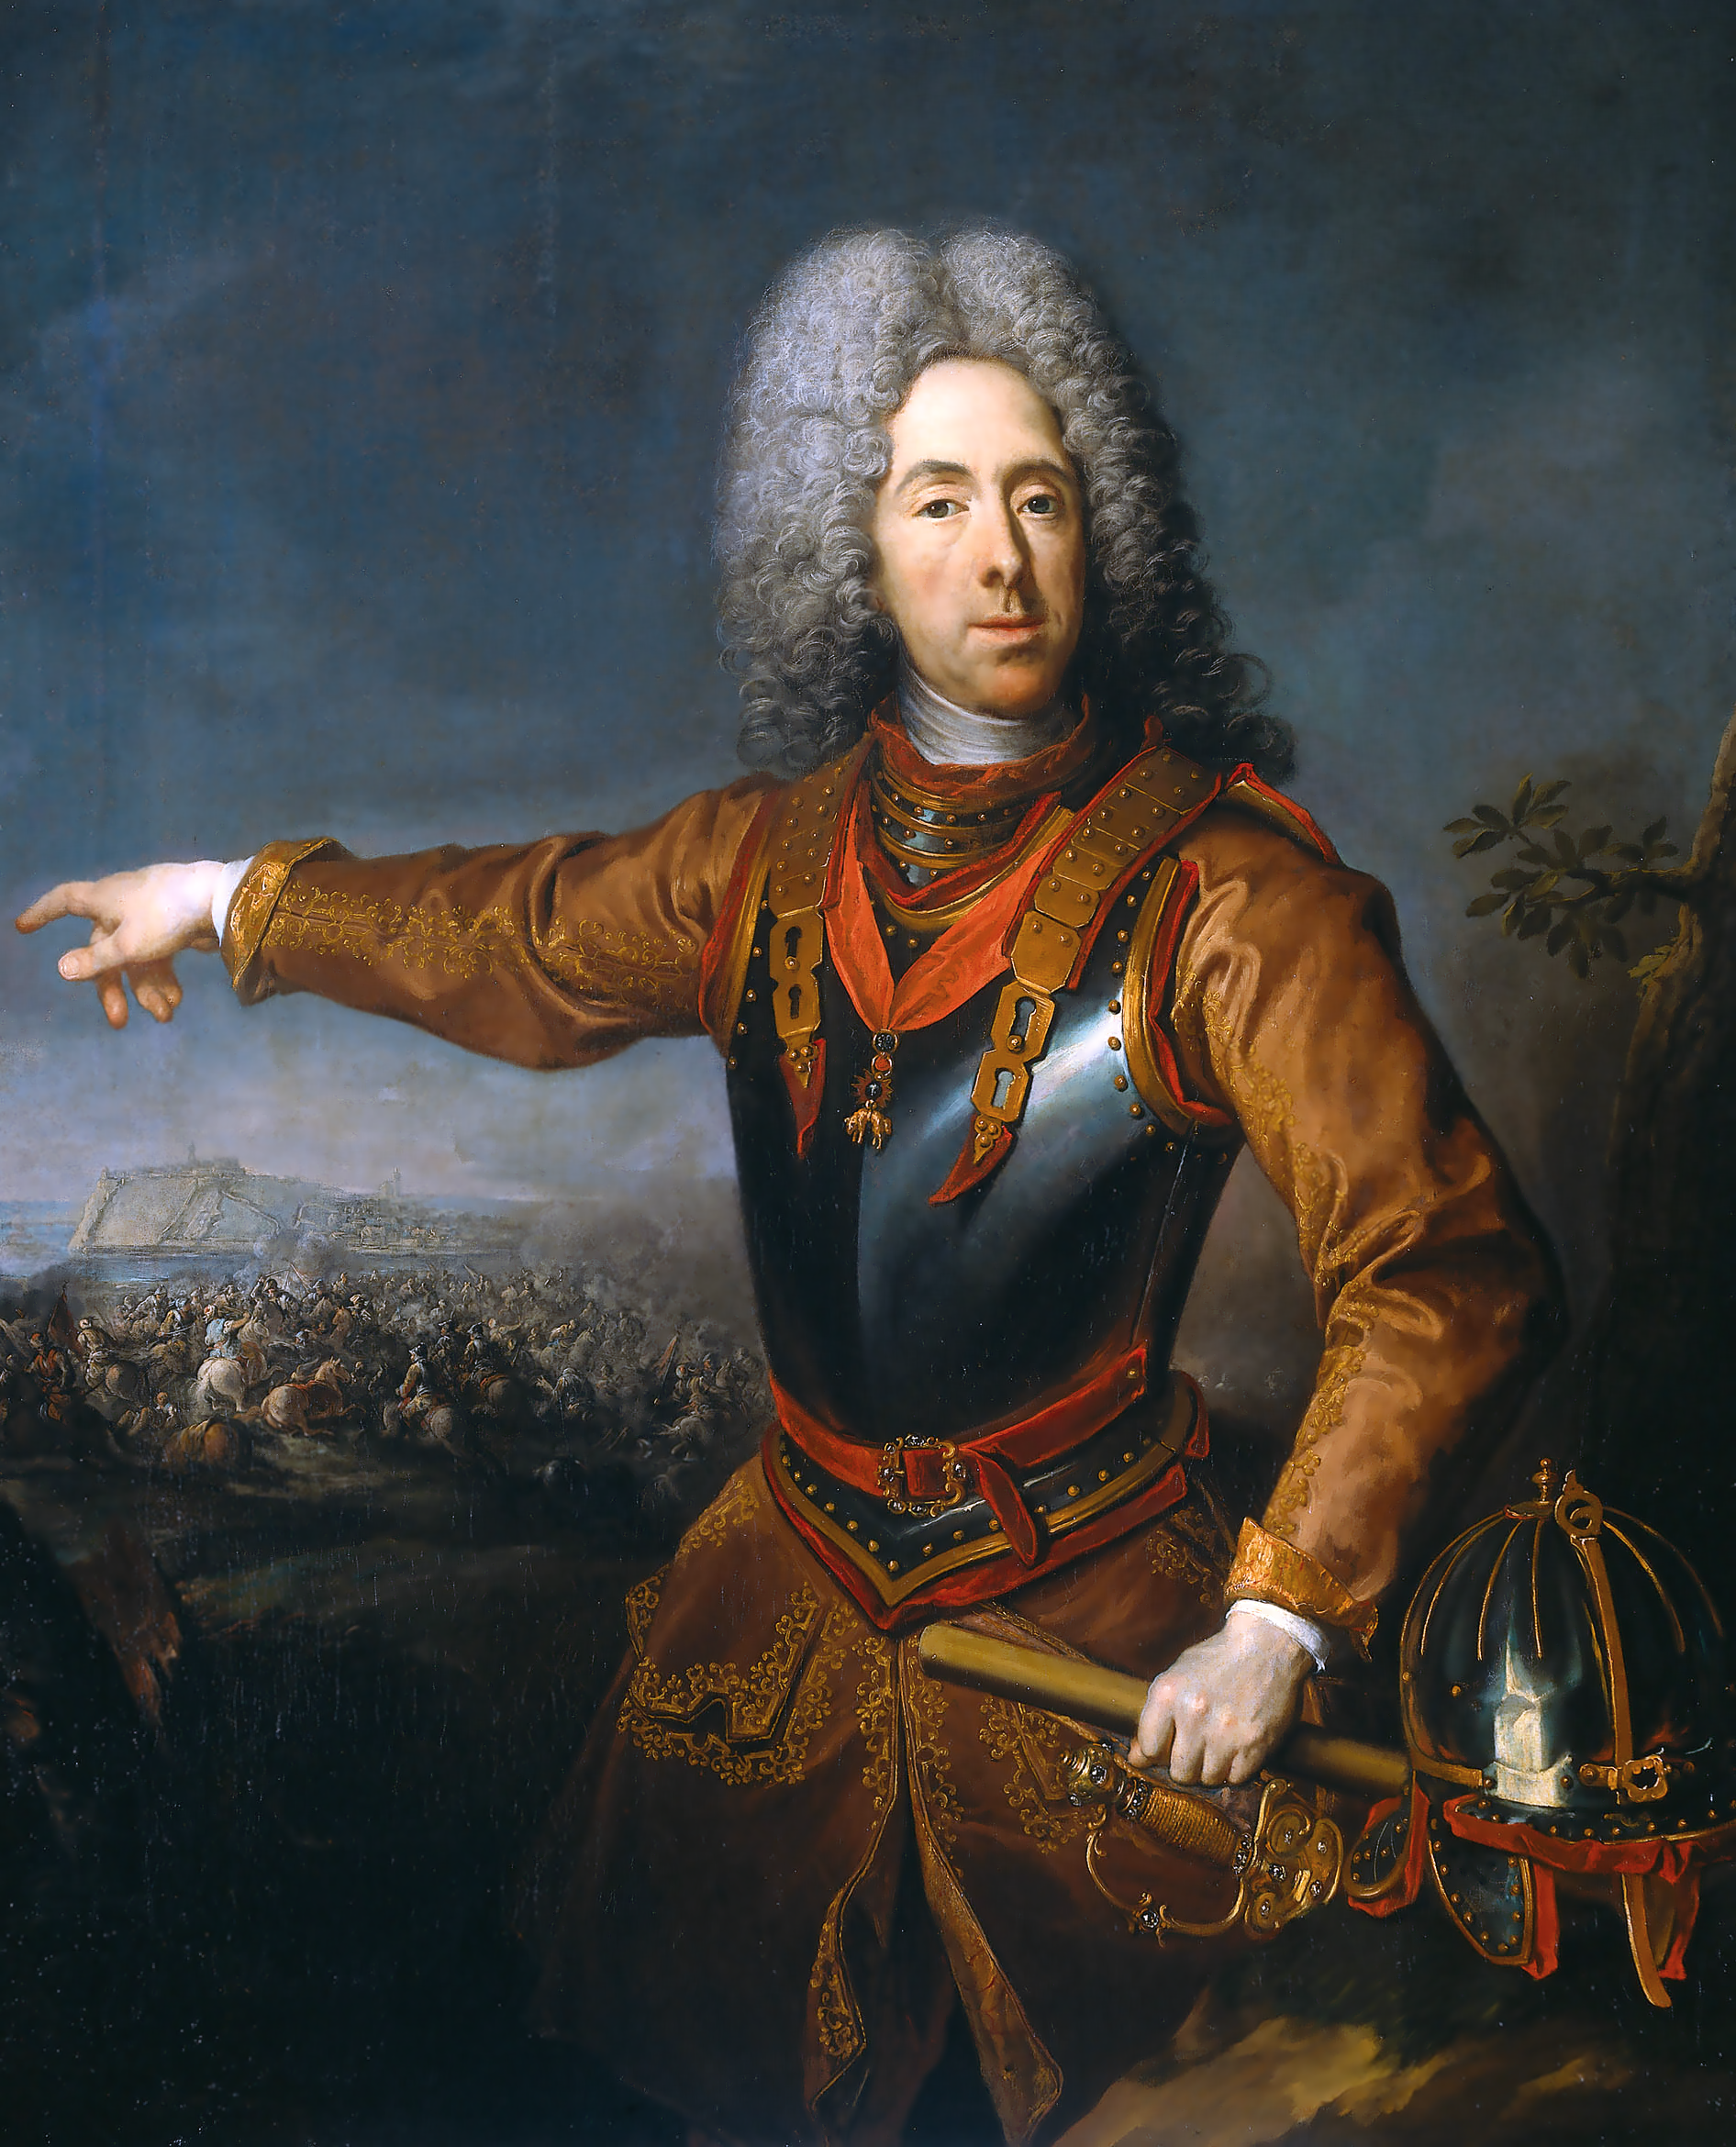 National hero of Austria - Prince Eugene of Savoy